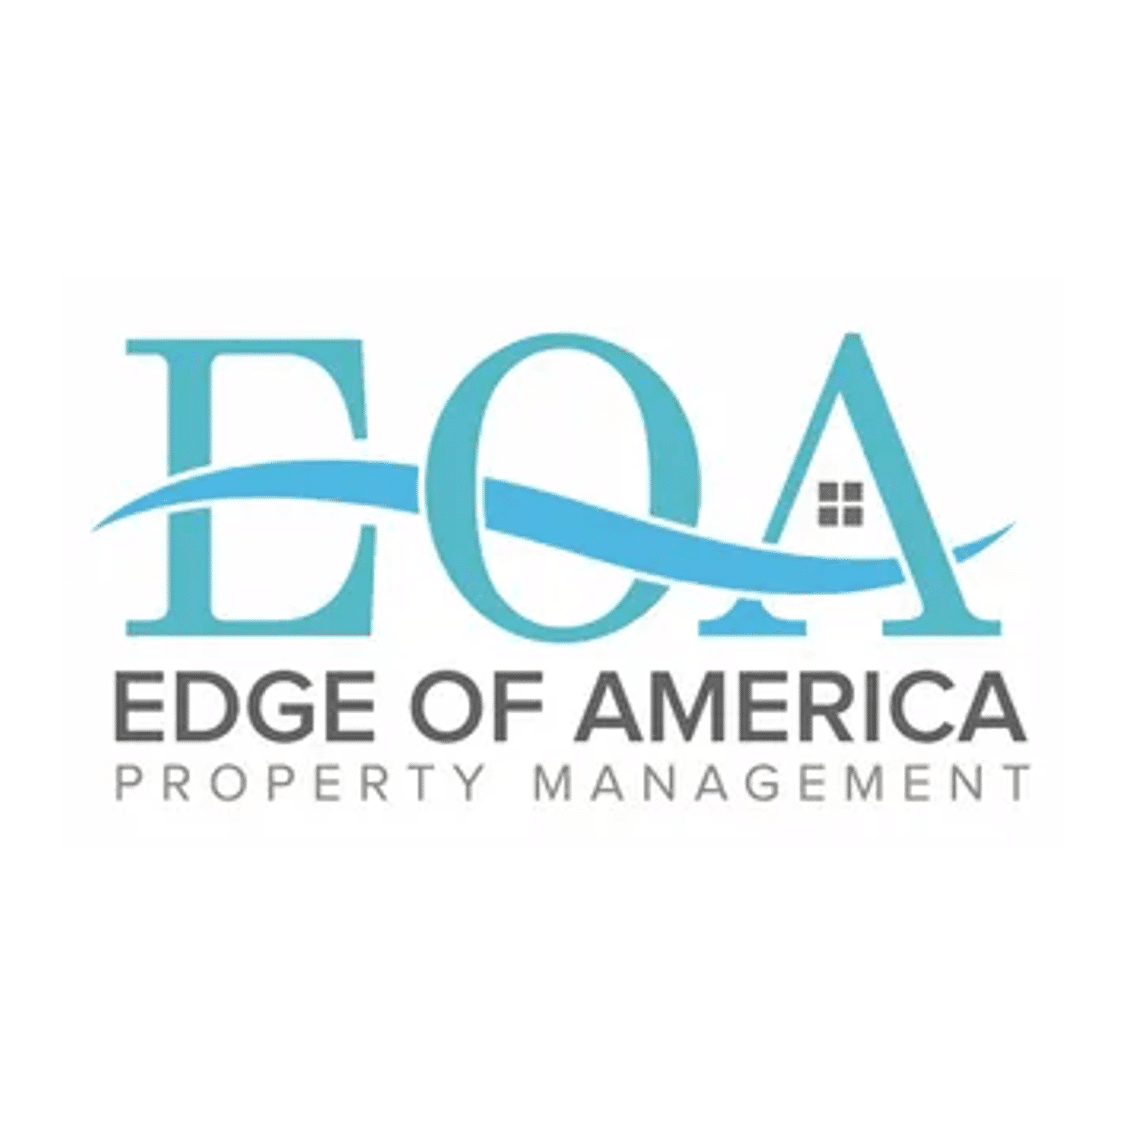 Edge of America Property Management